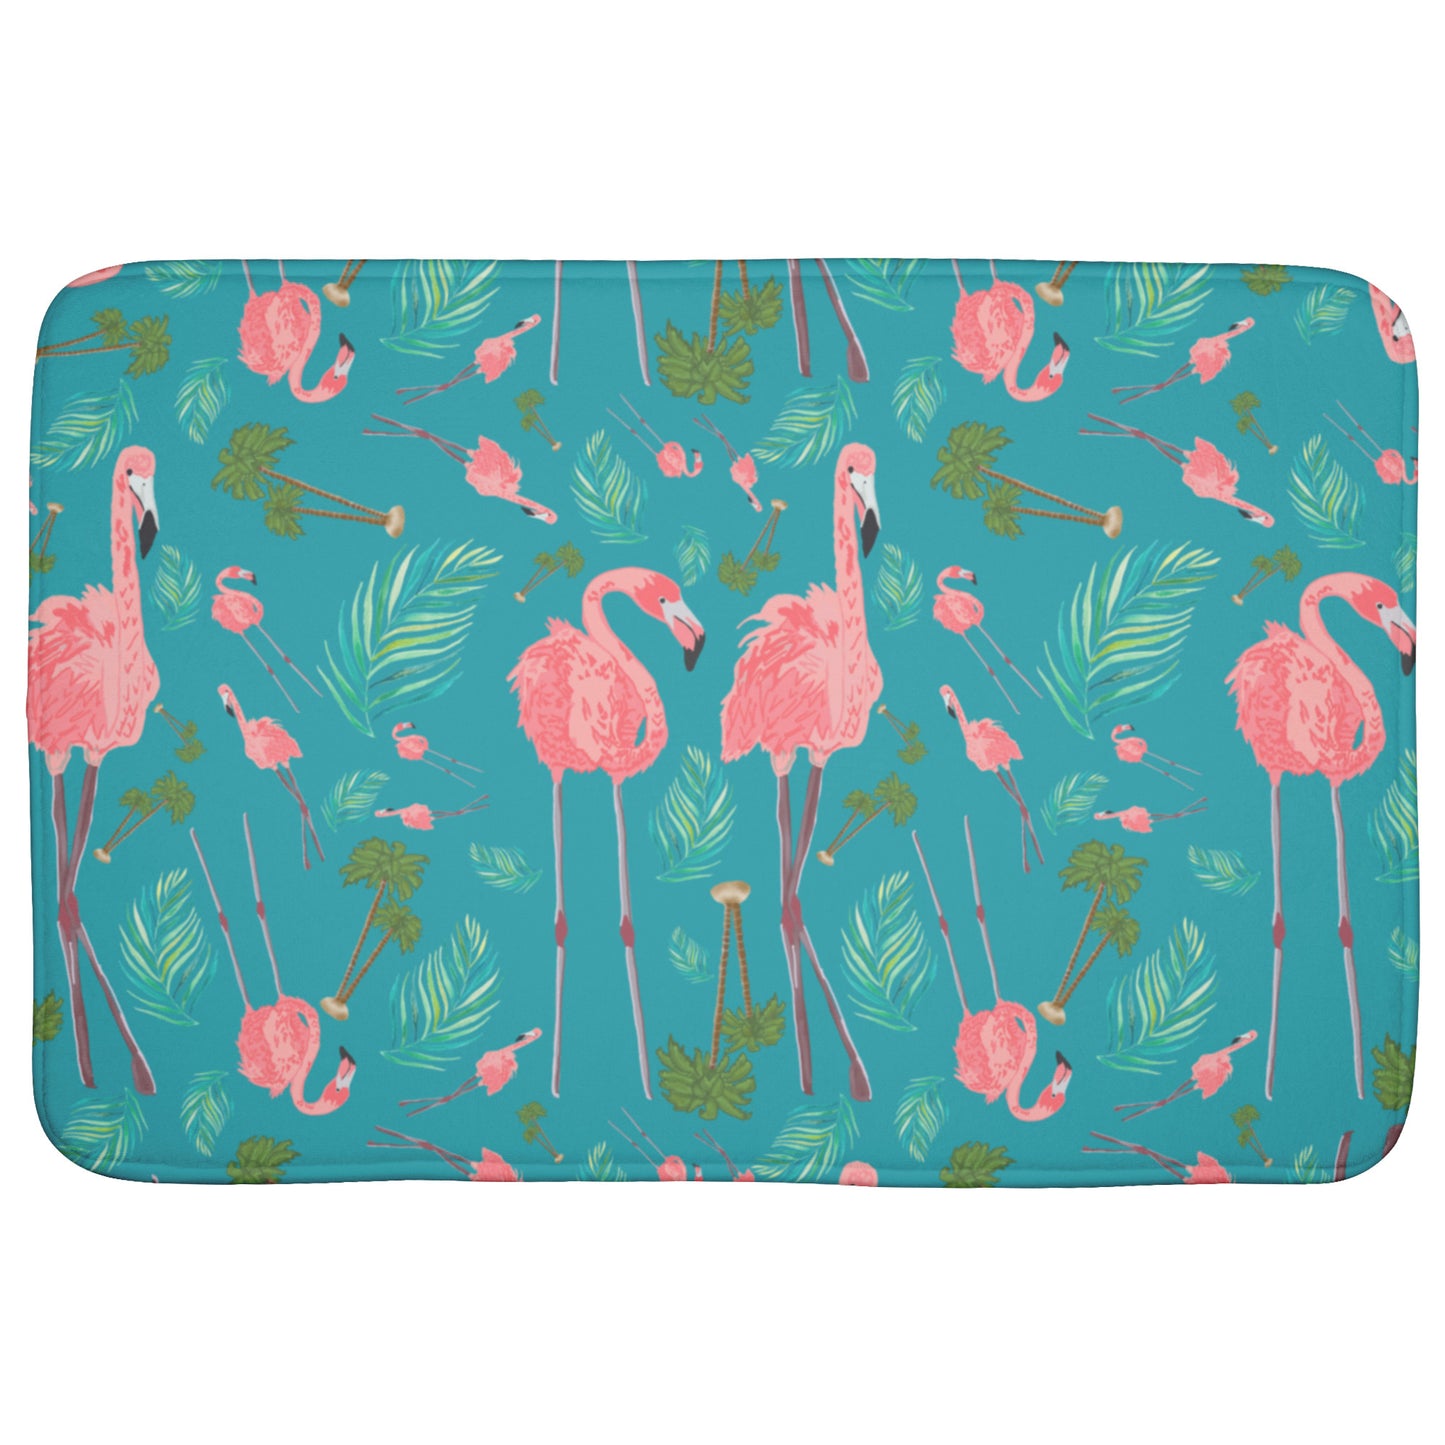 Flamingos on Teal Background, Bath Mats